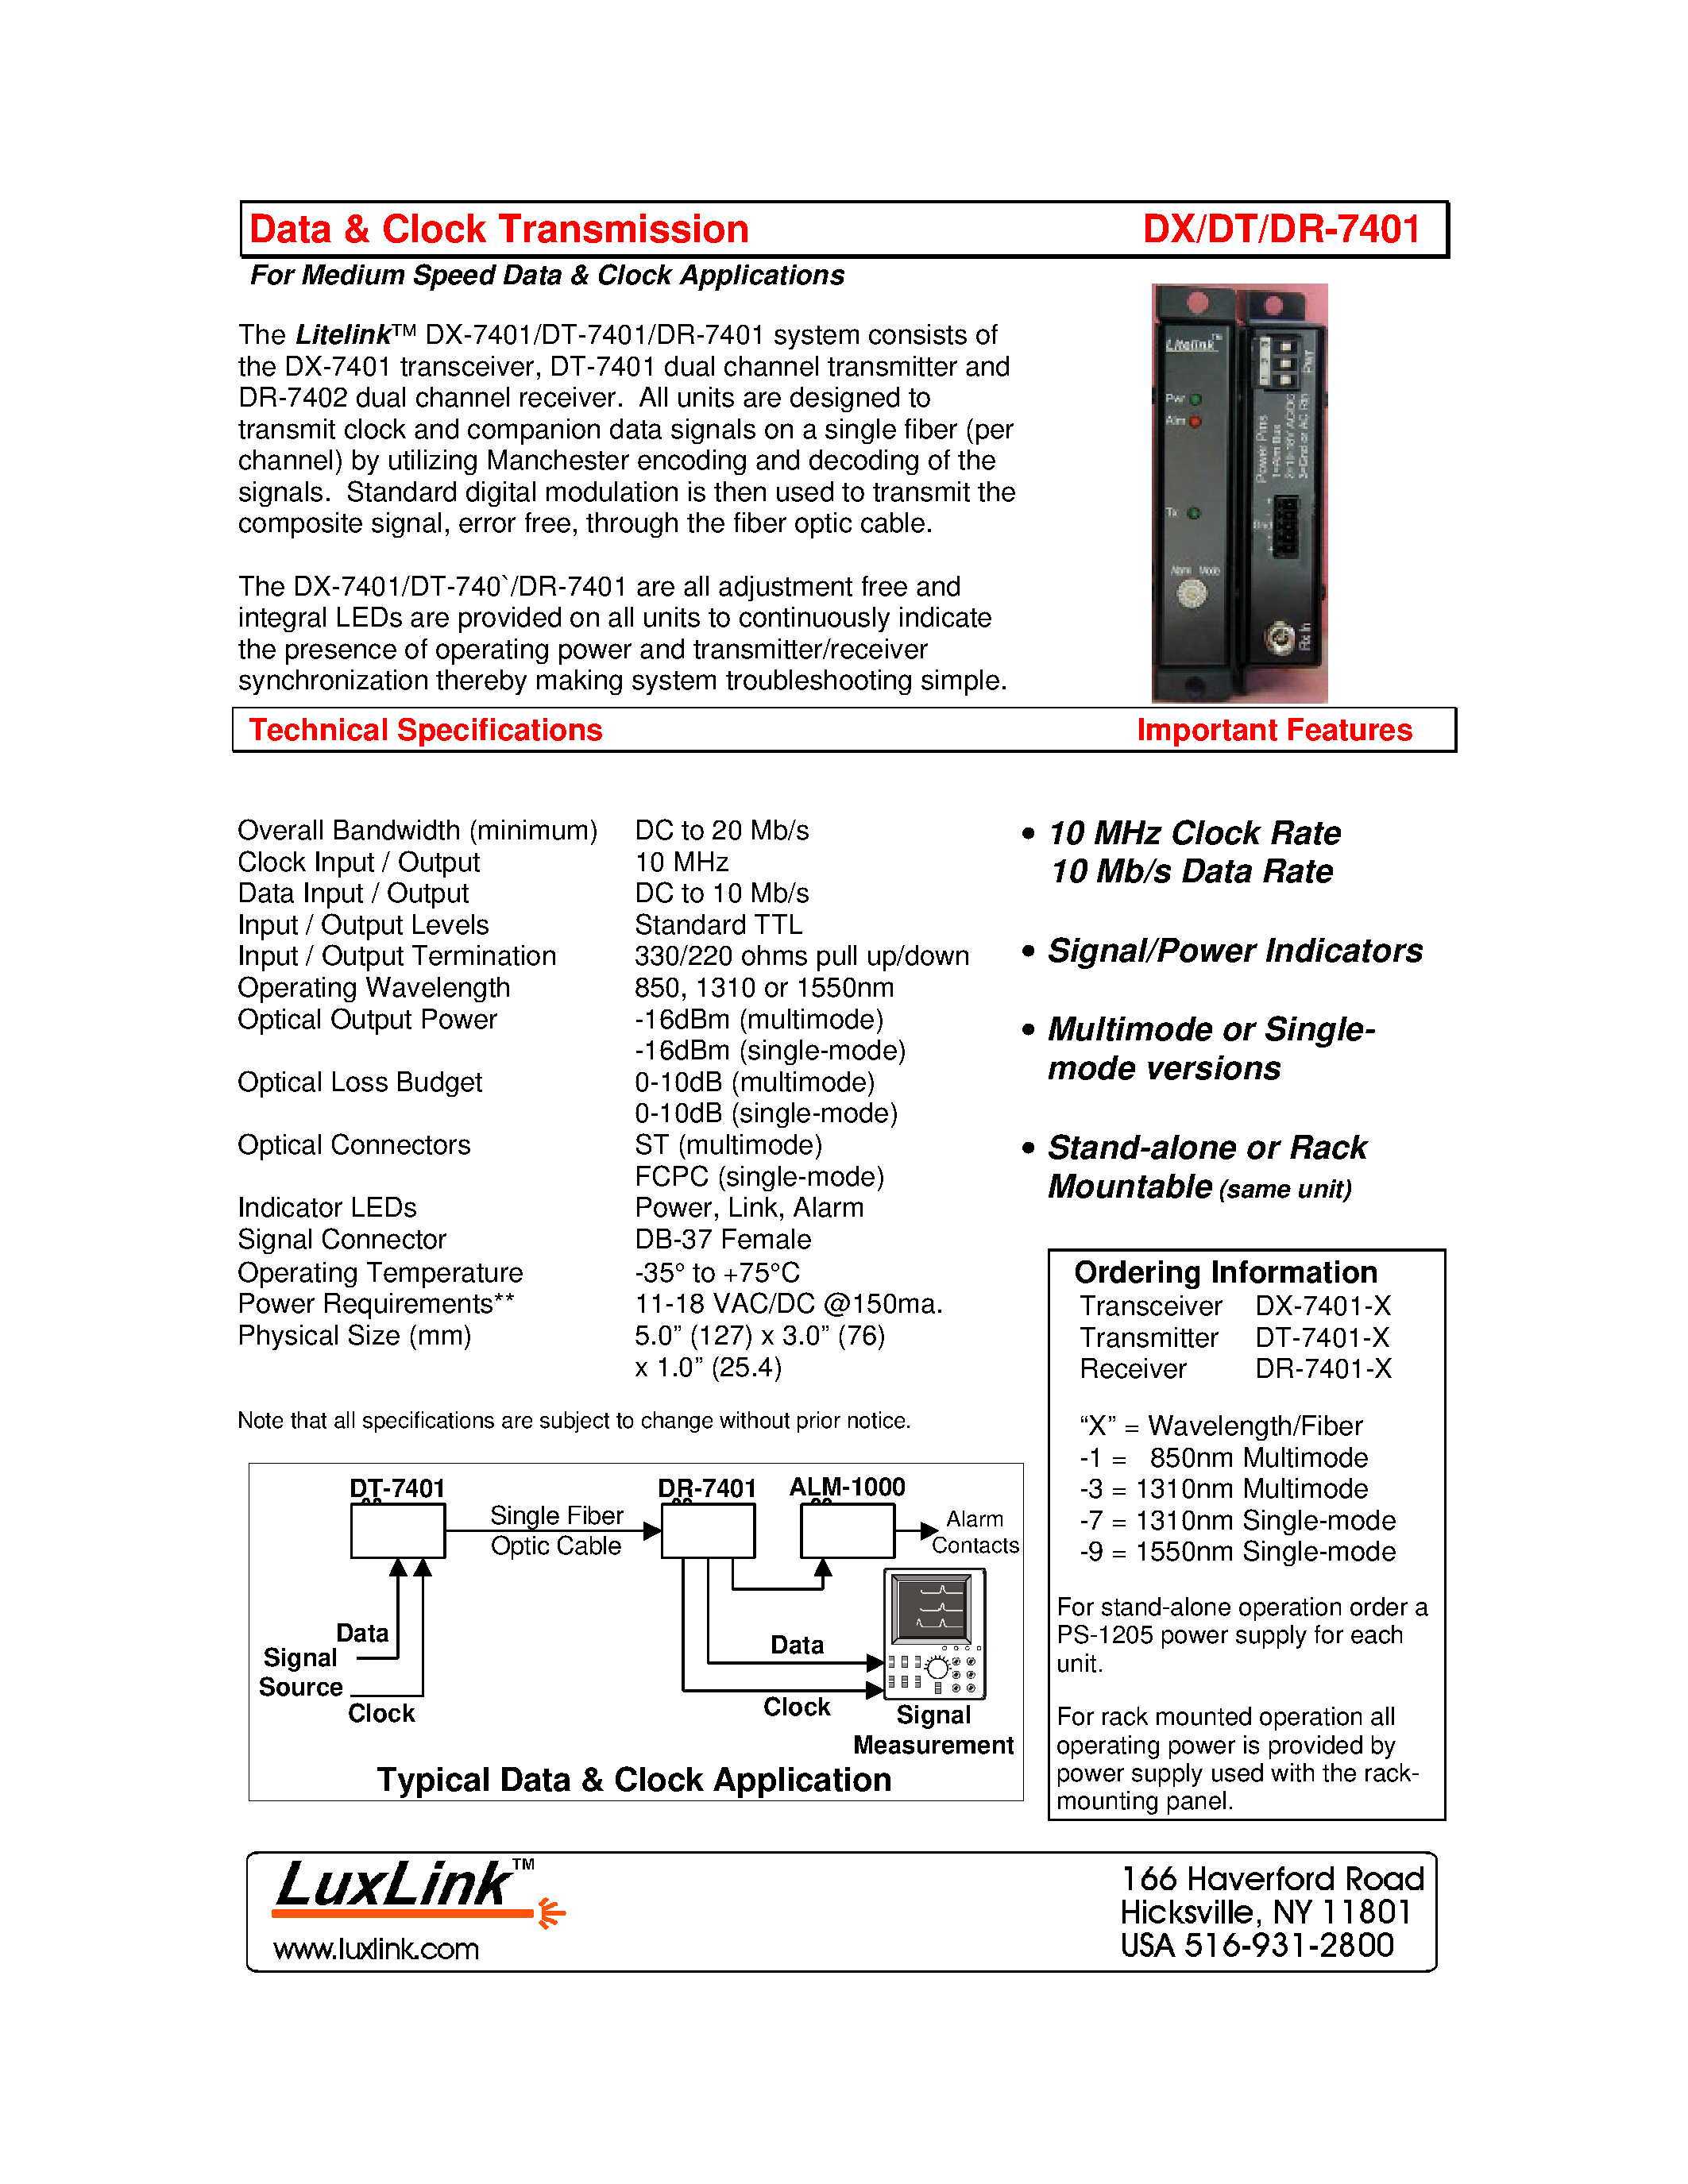 Datasheet DT-7401-9 - DATA & CLOCK TRANSMISSION page 1